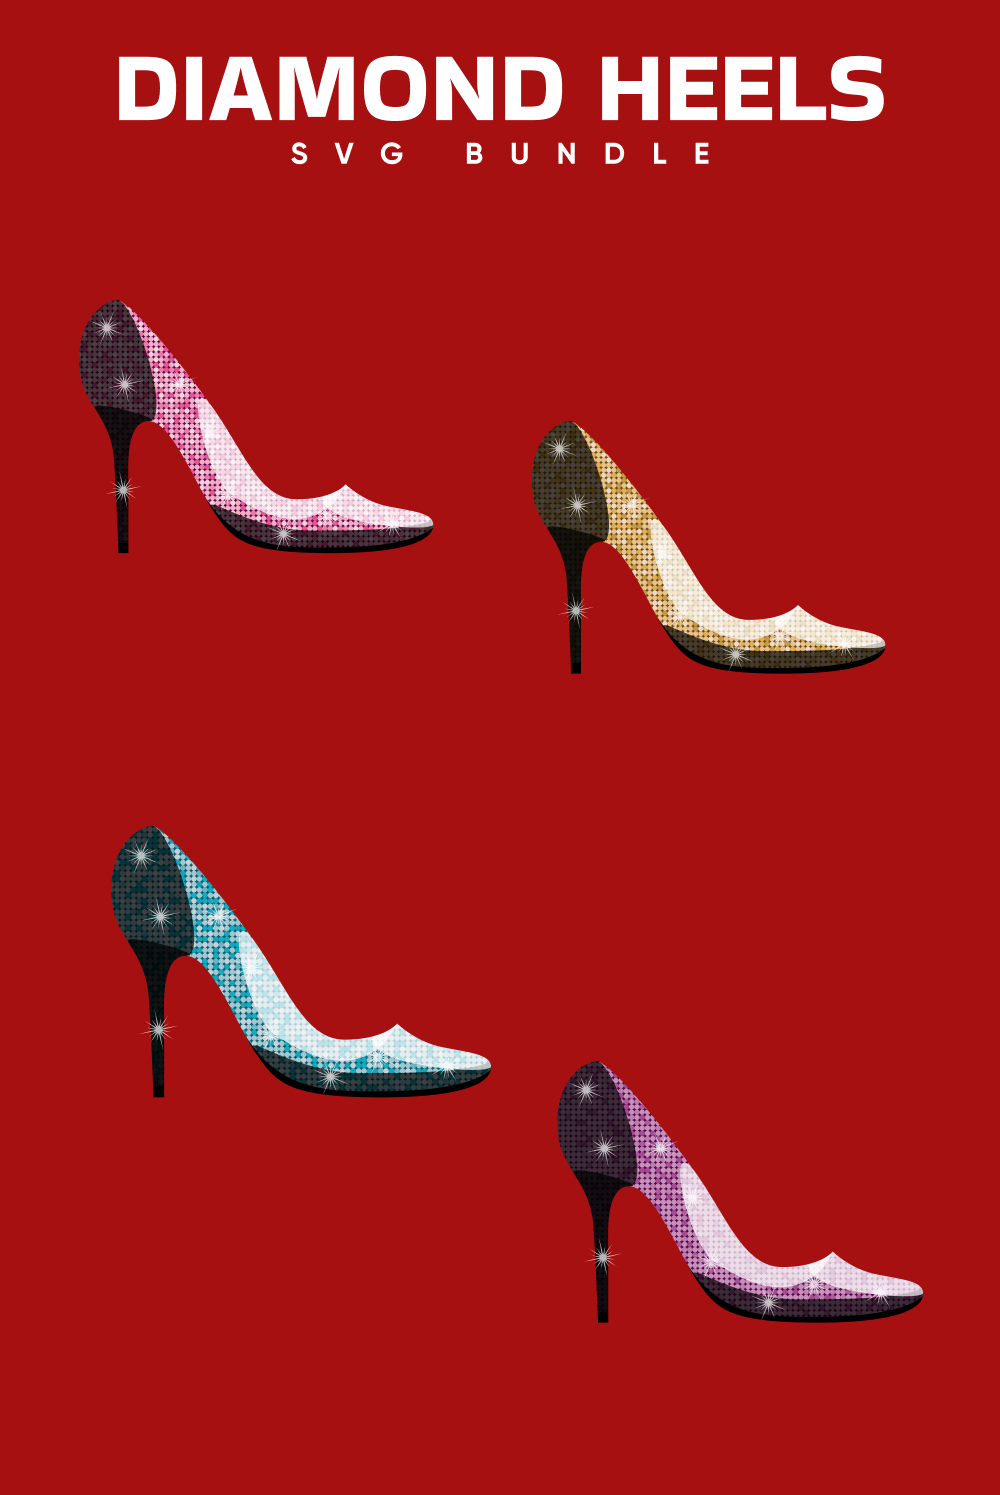 Diamond heels svg bundle images of pinterest.